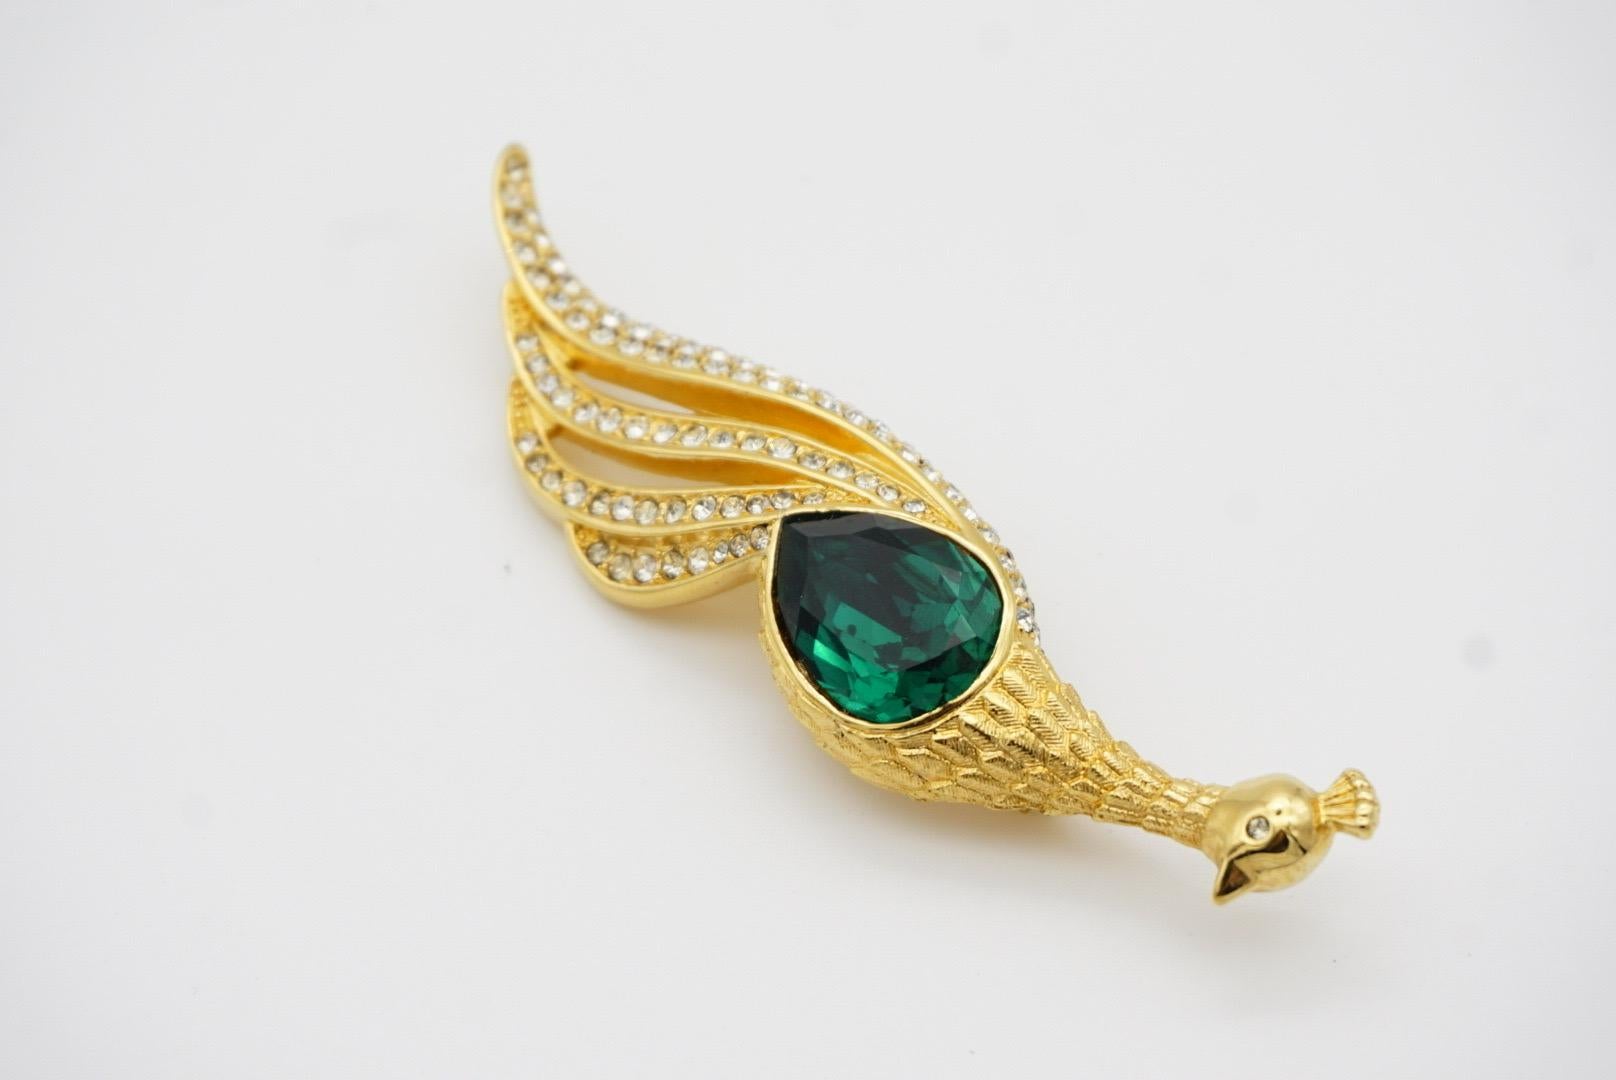 Christian Dior Vintage 1980s Long Vivid Peacock Emerald Crystal Openwork Brooch For Sale 7